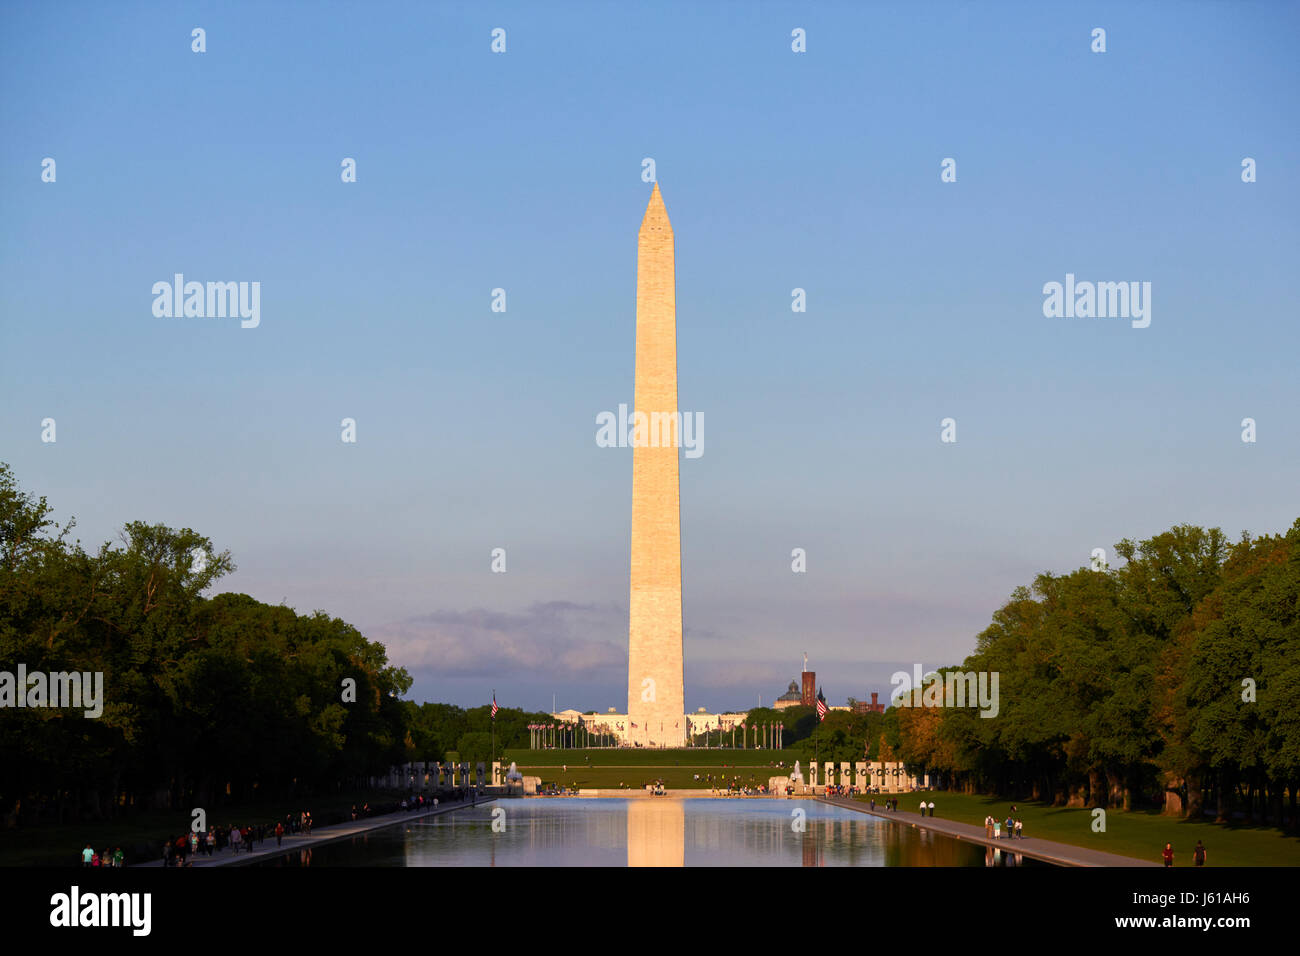 the washington monument Washington DC USA Stock Photo